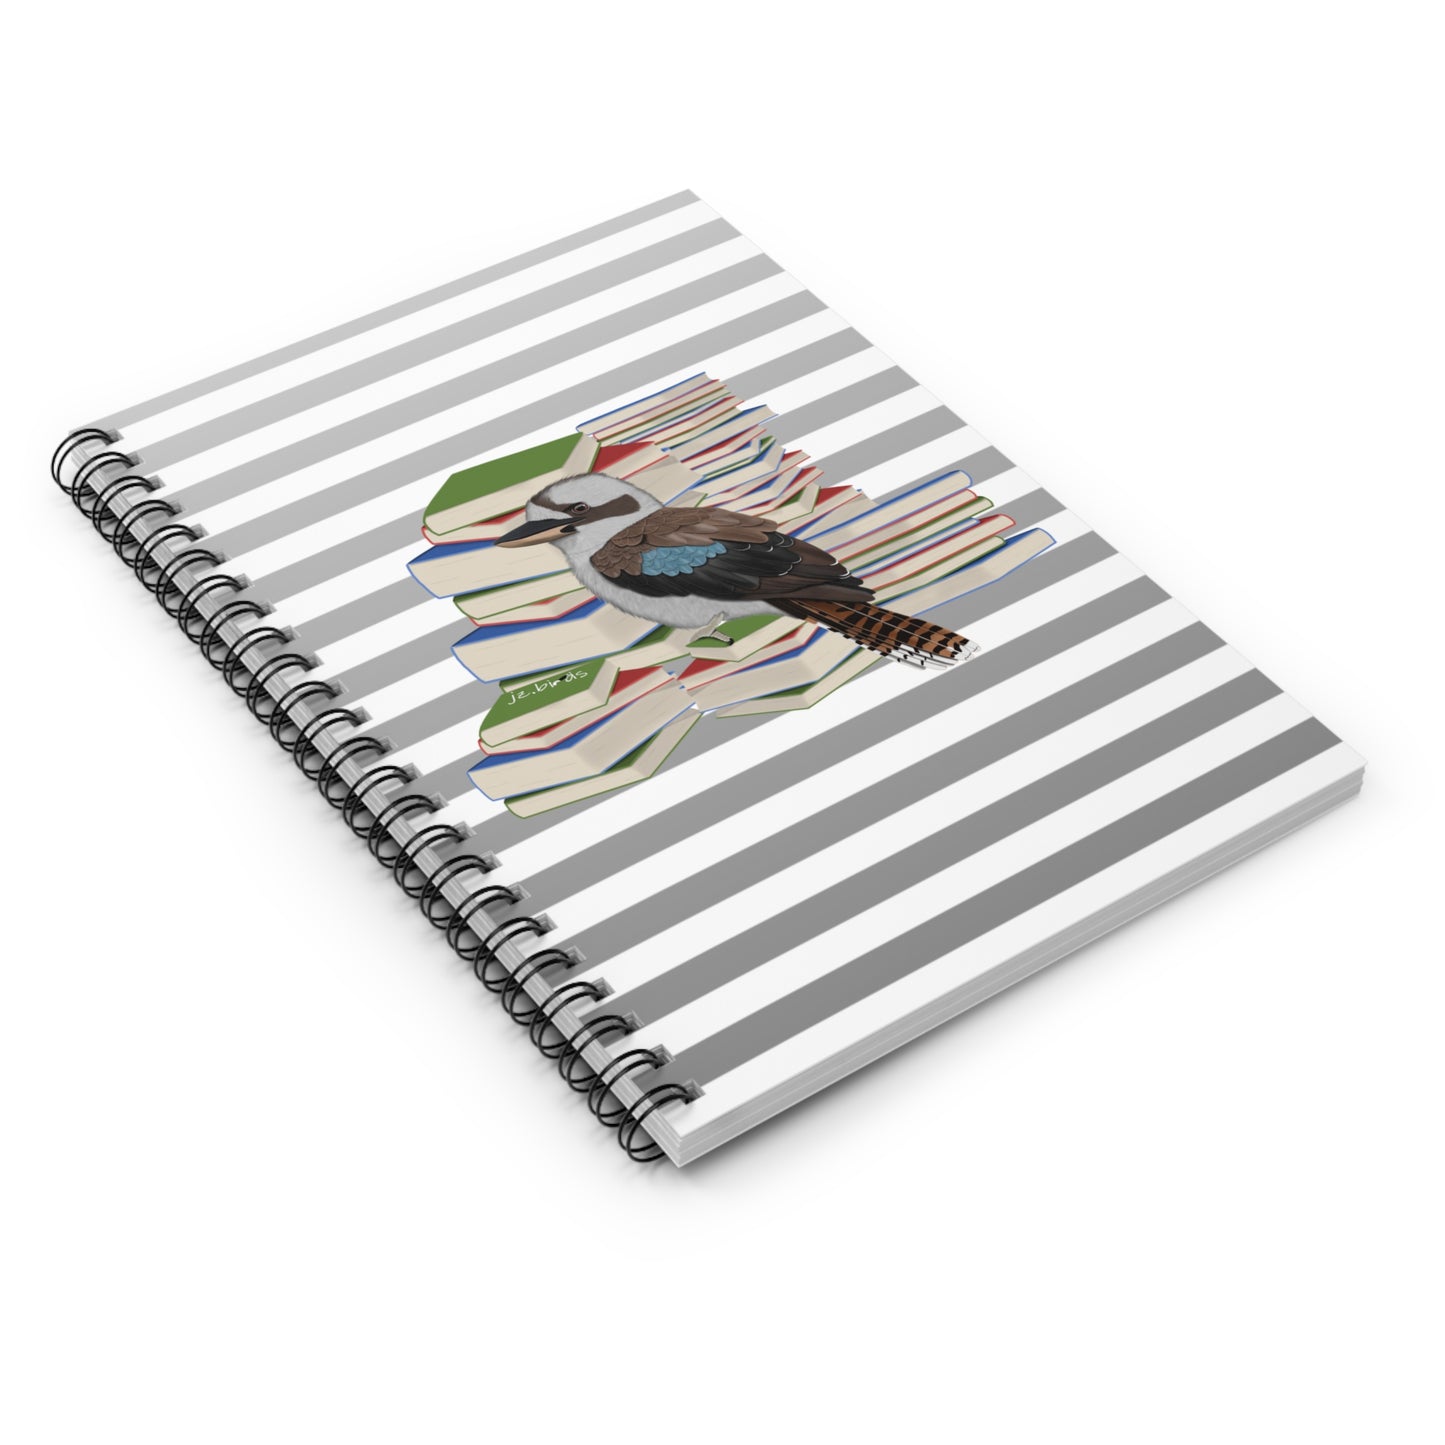 Kookaburra Bird with Books Birdlover Bookworm Spiral Notebook Ruled Line 6" x 8"